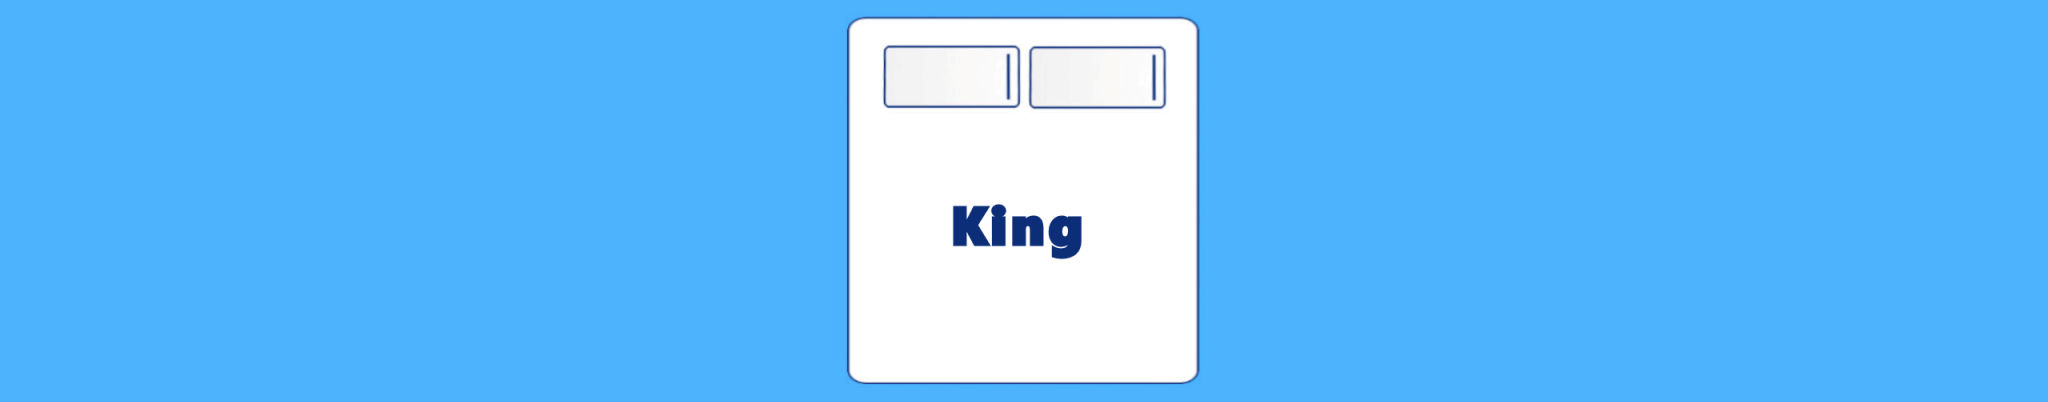 king size hospital bed mattress size